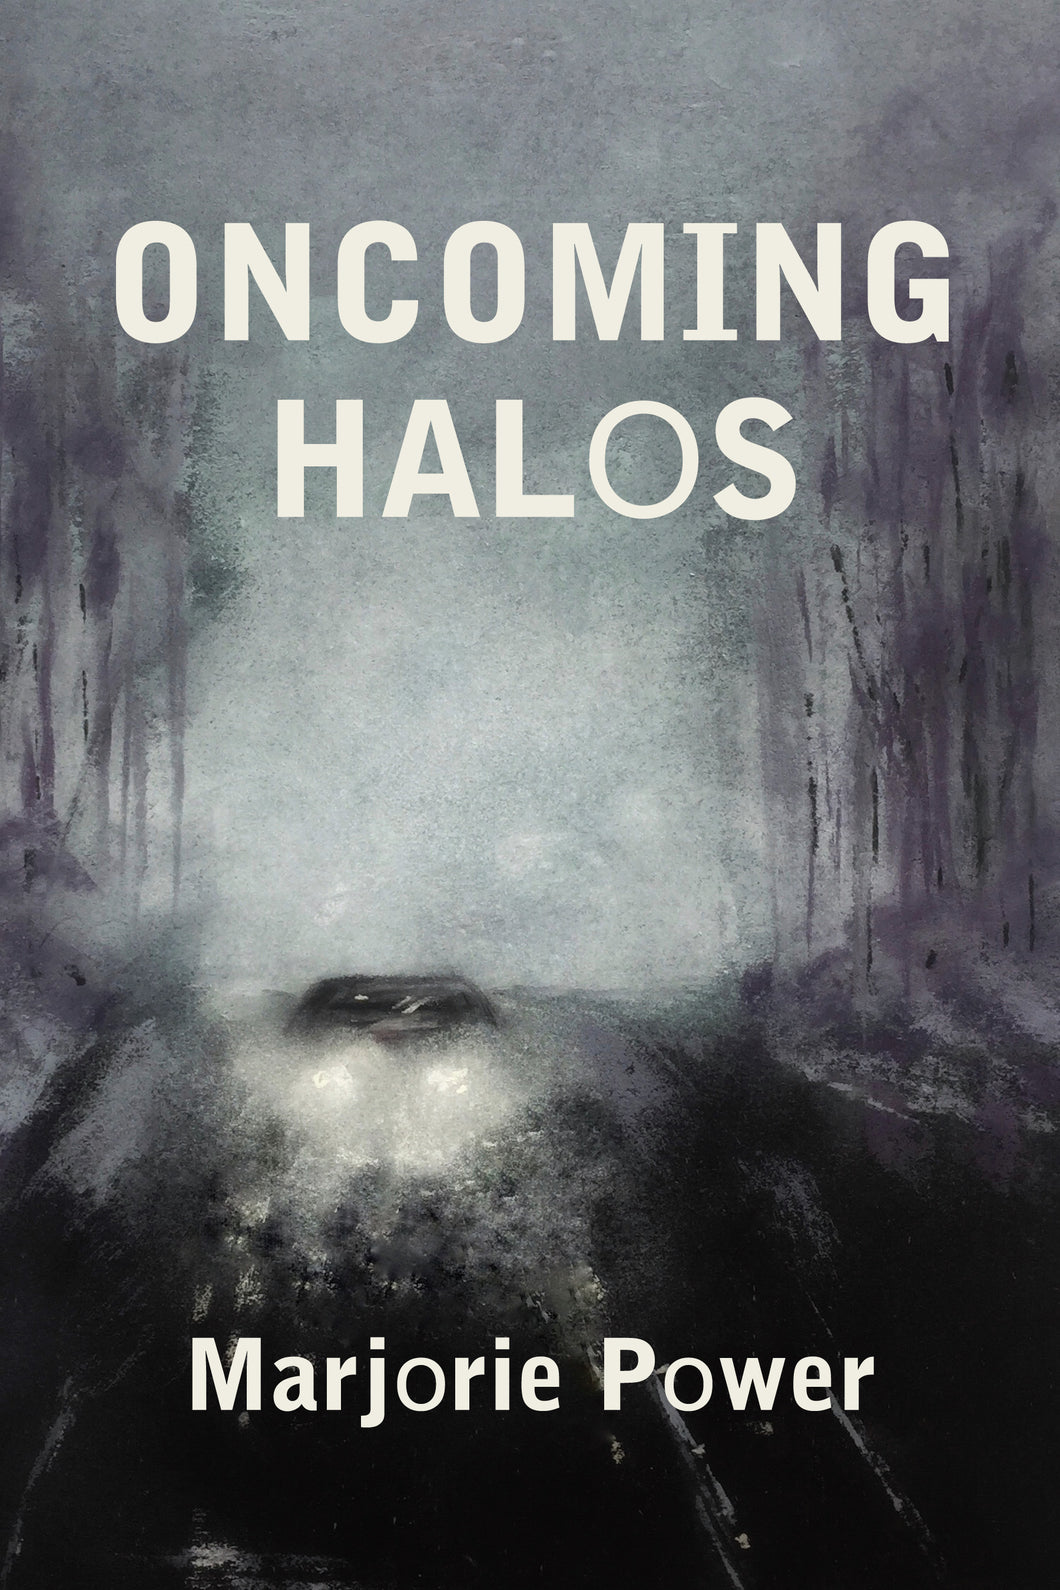 Oncoming Halos